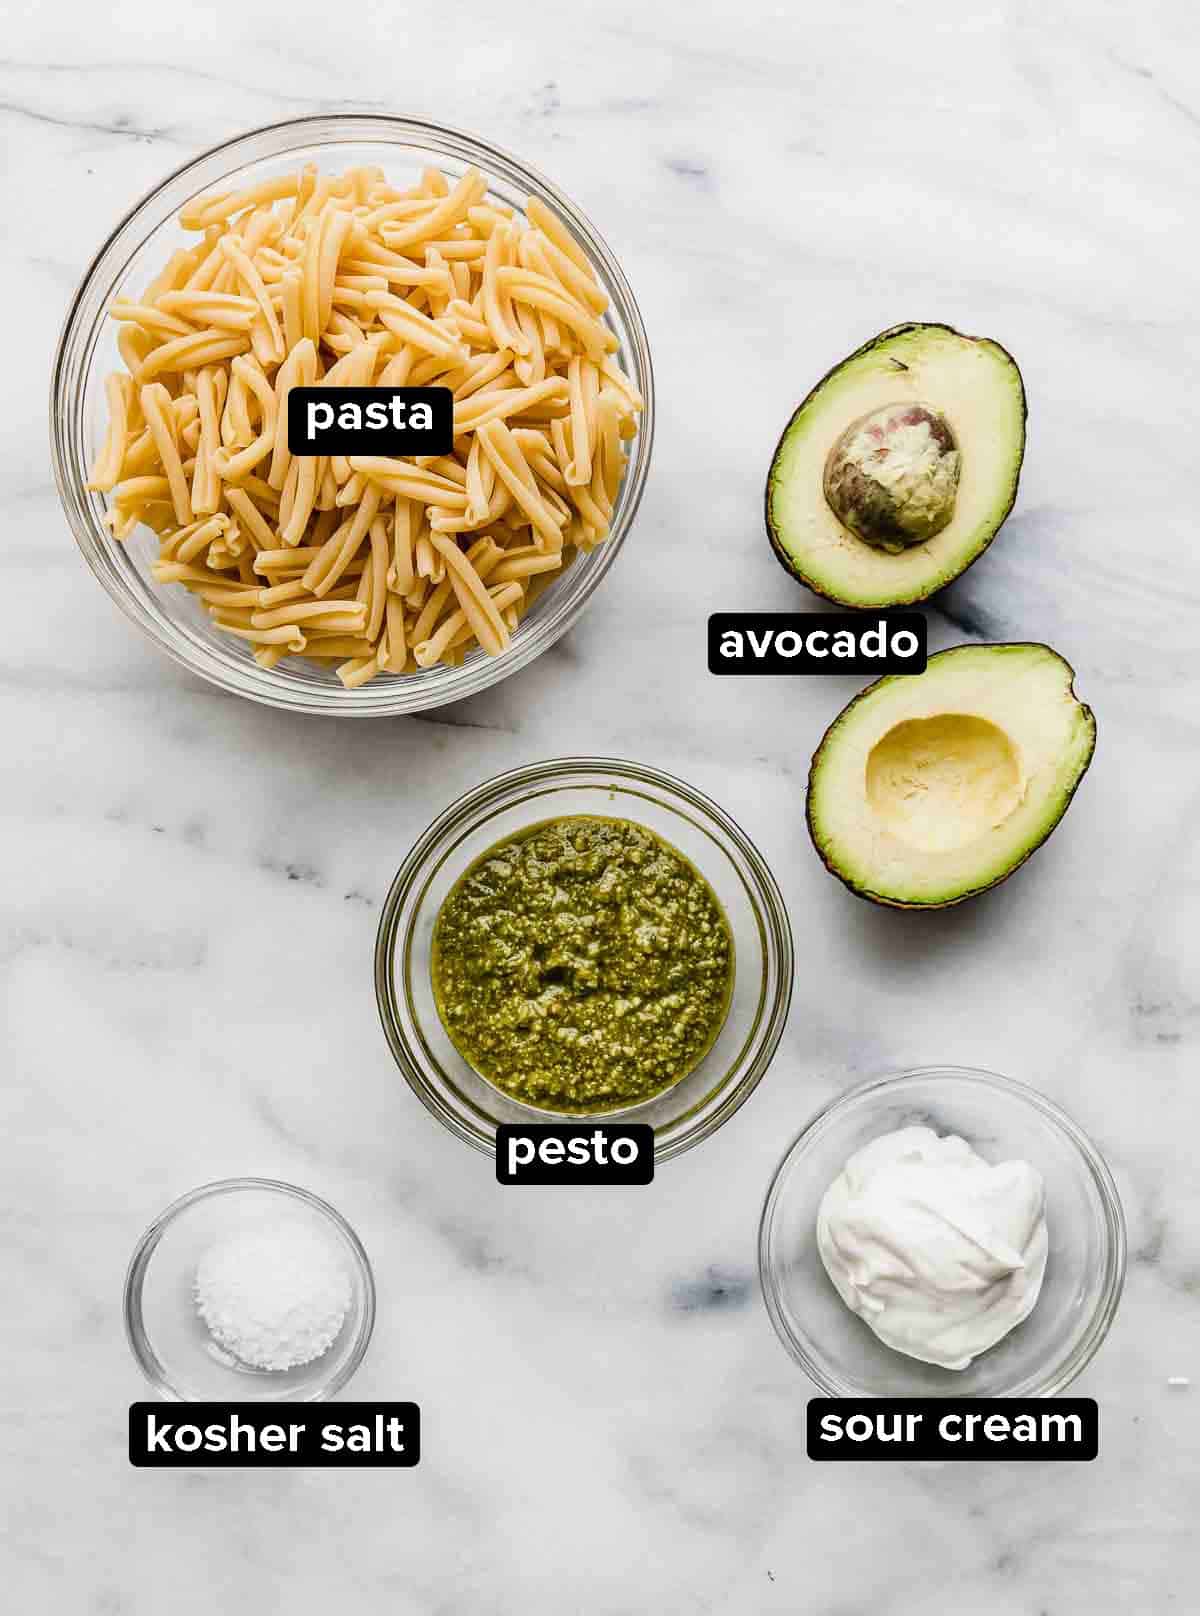 Avocado Pesto Pasta ingredients on a white and gray marble background: noodles, sour cream, salt, basil pesto, and an avocado.